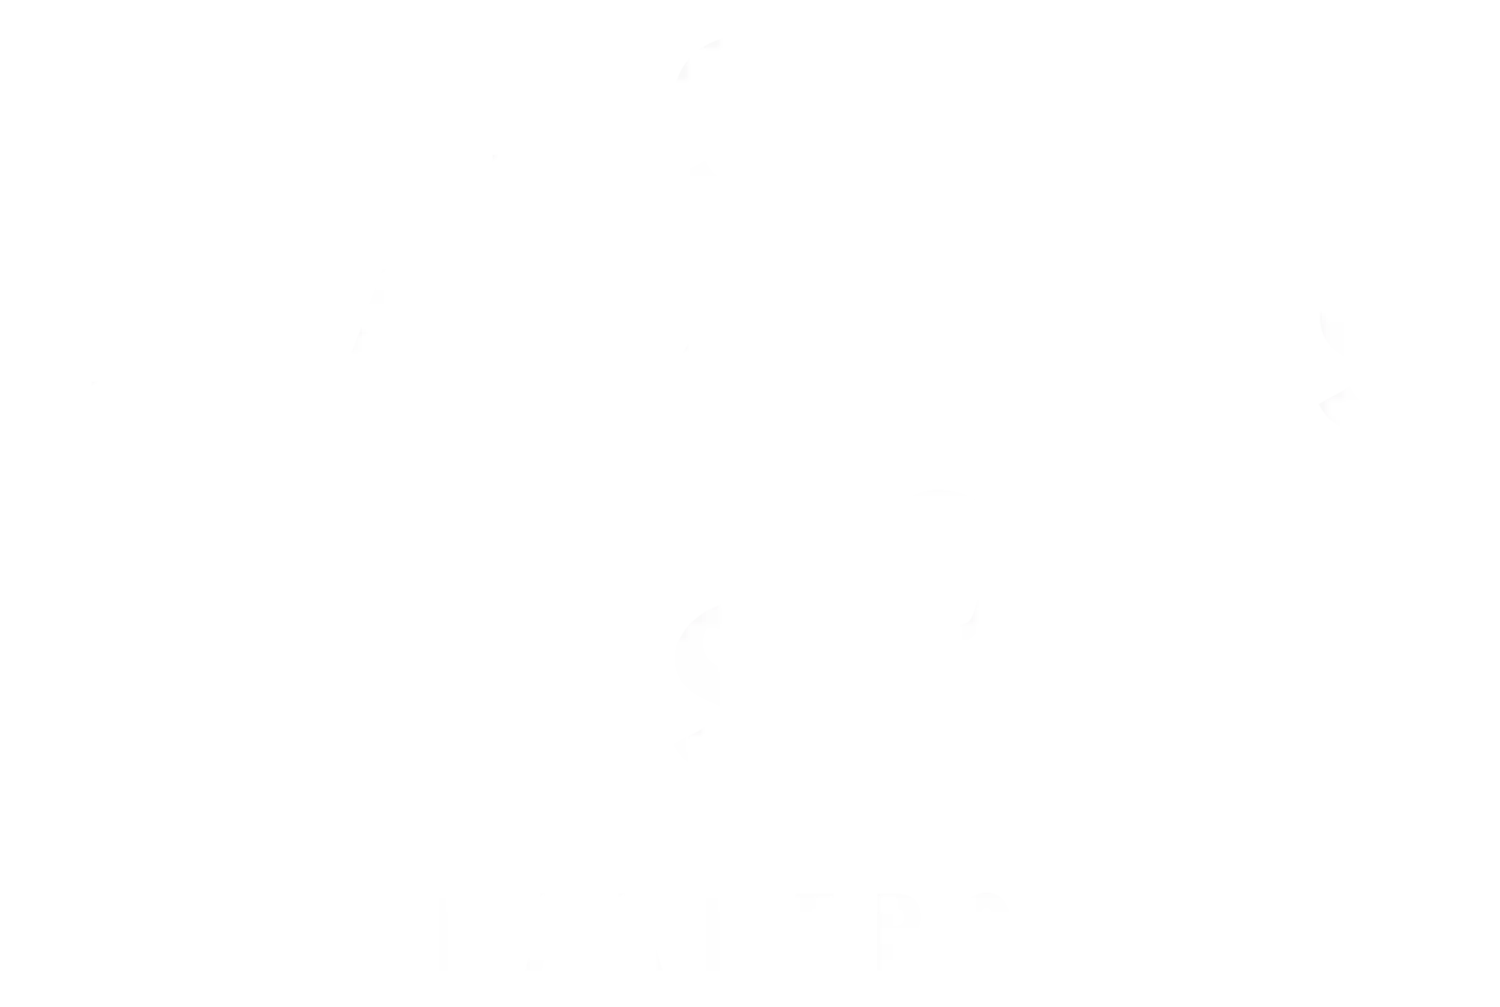 Eves & Sons Barbers